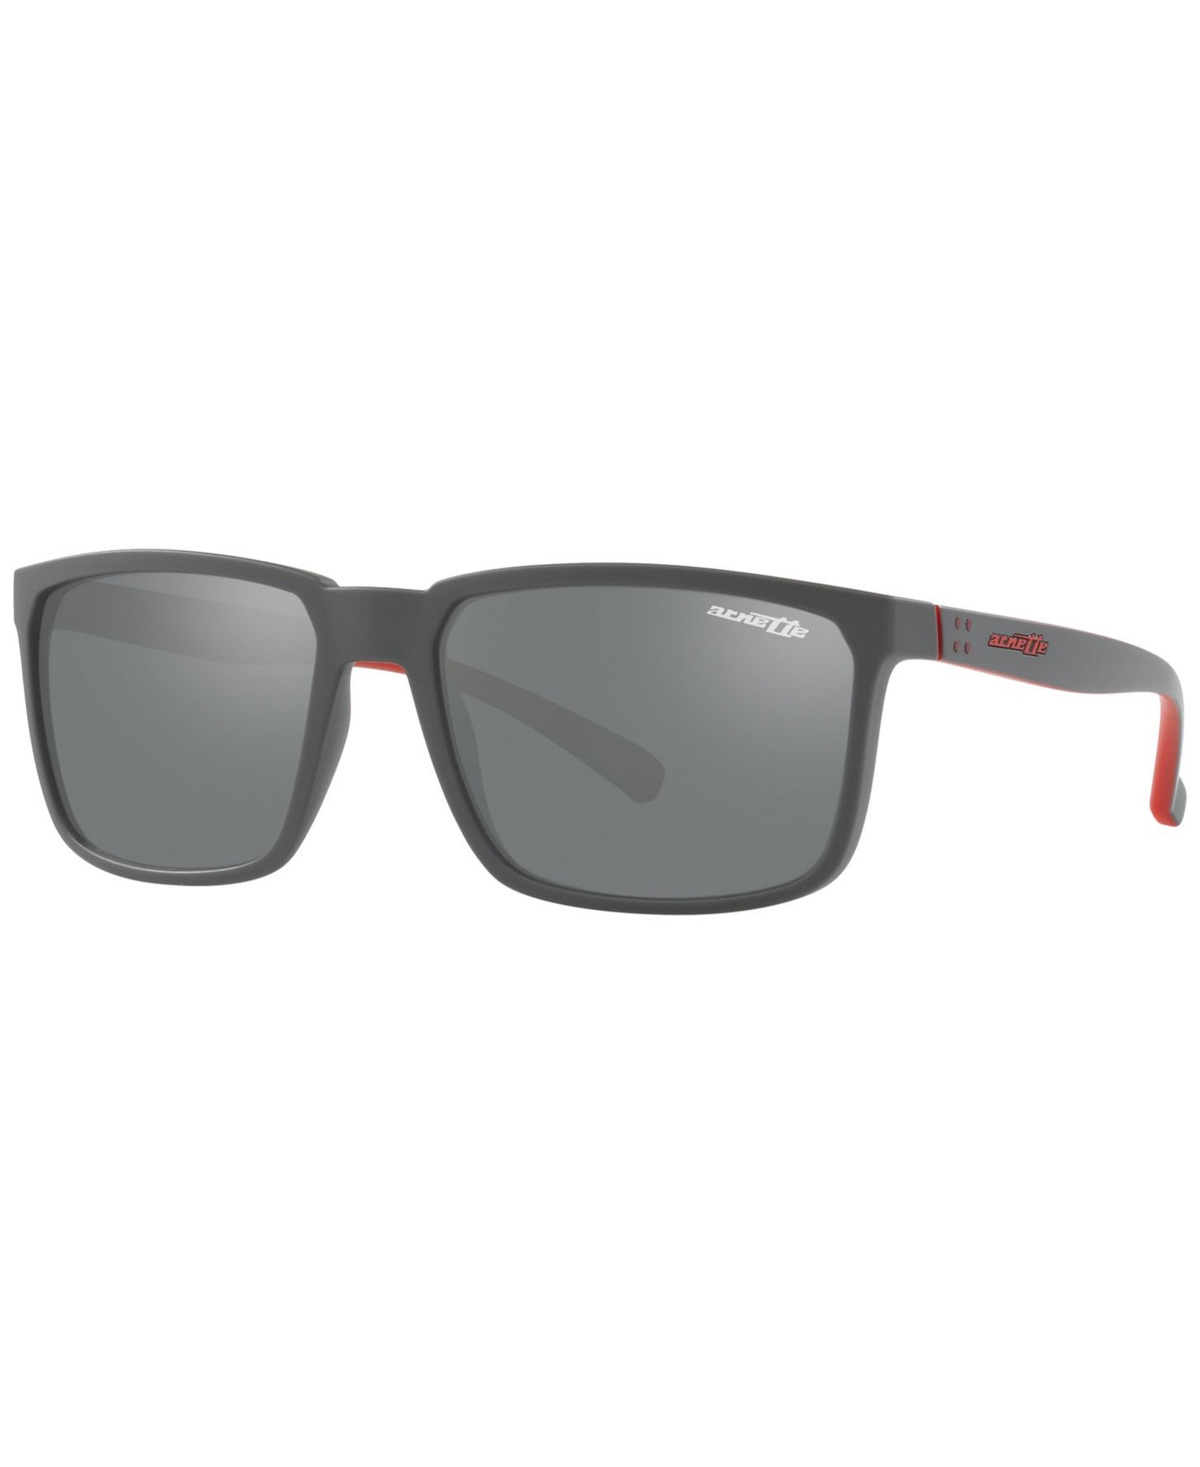 Sunglasses, AN4251 58 Stripe - MATTE GREY / GREY MIRROR SILVER